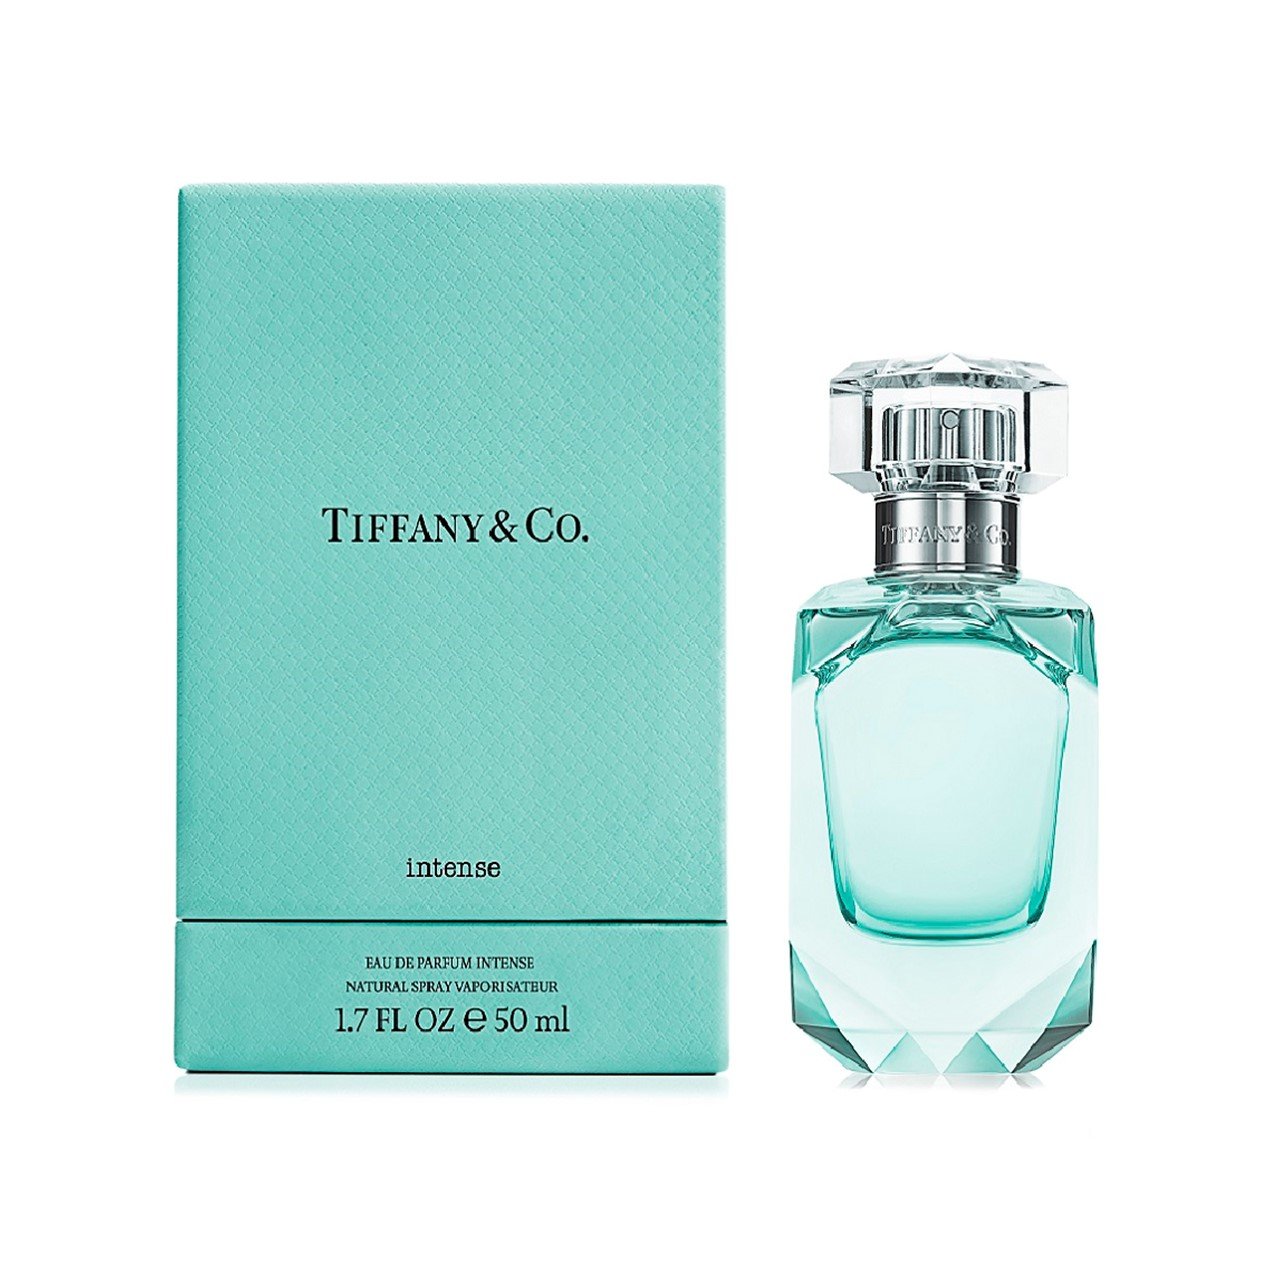 tiffany & co eau de parfum 50ml